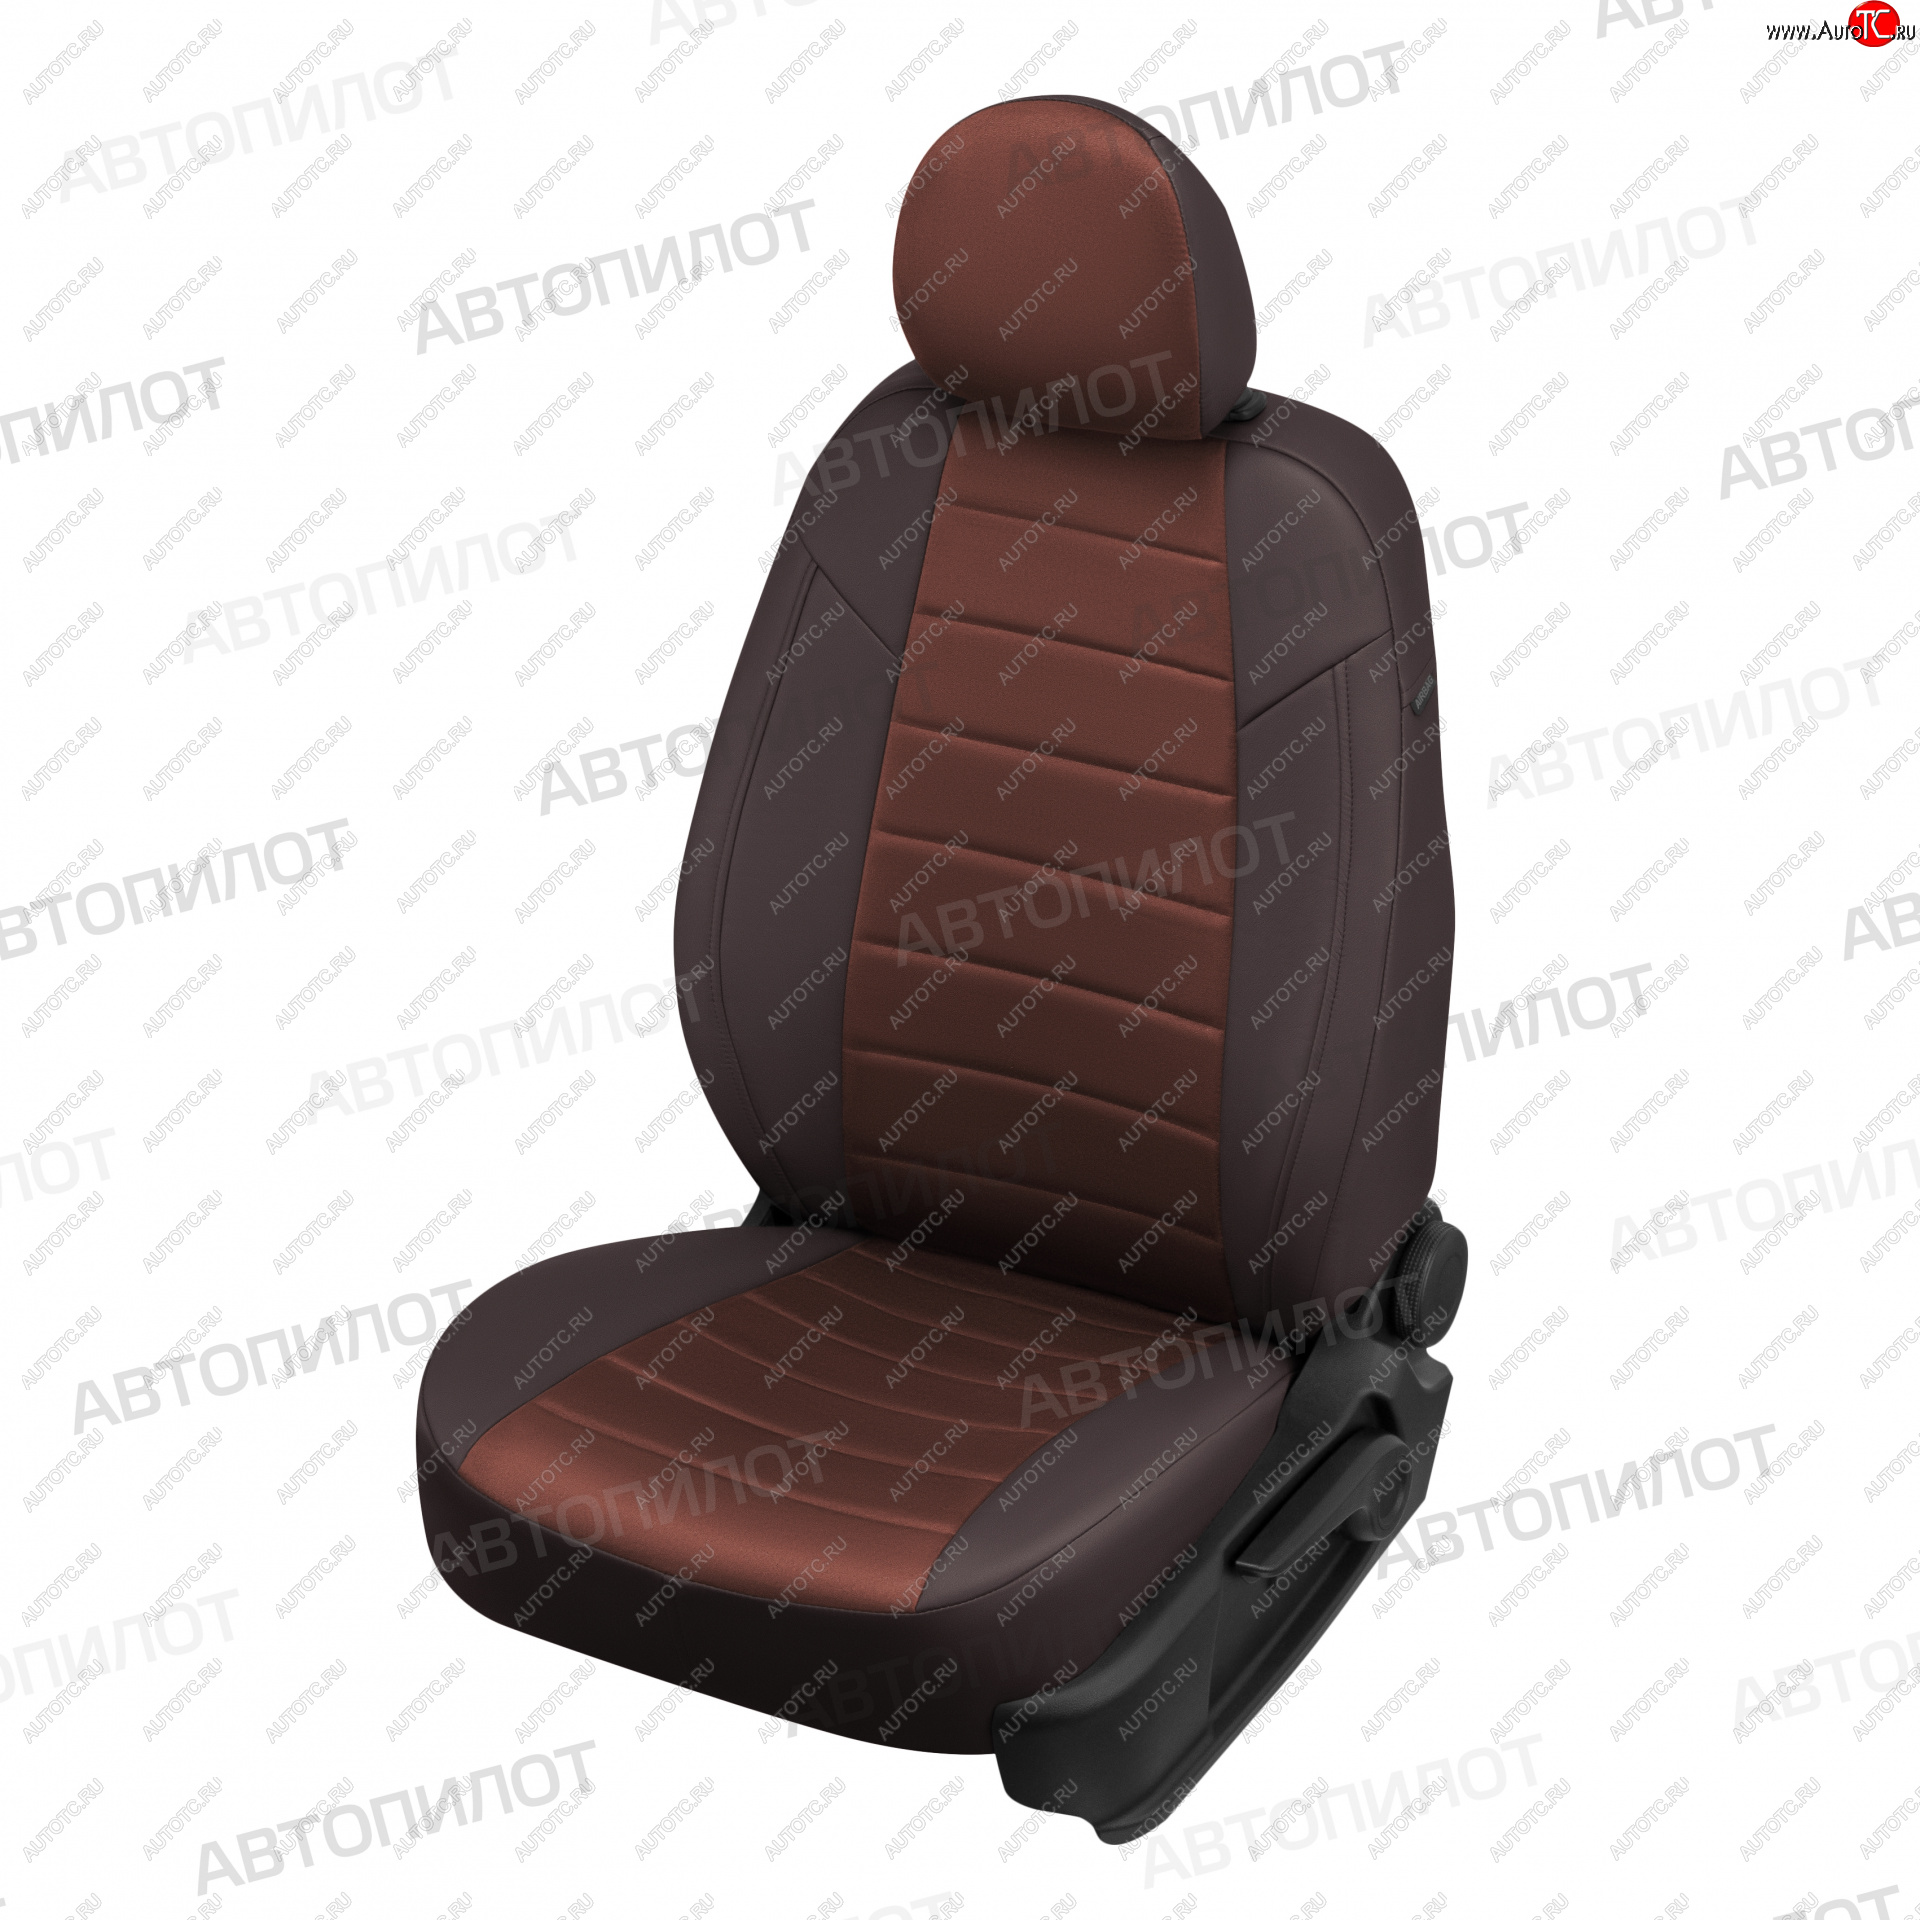 13 449 р. Чехлы сидений (экокожа/алькантара) Автопилот  Ford Ka  1 (1996-2008) (шоколад)